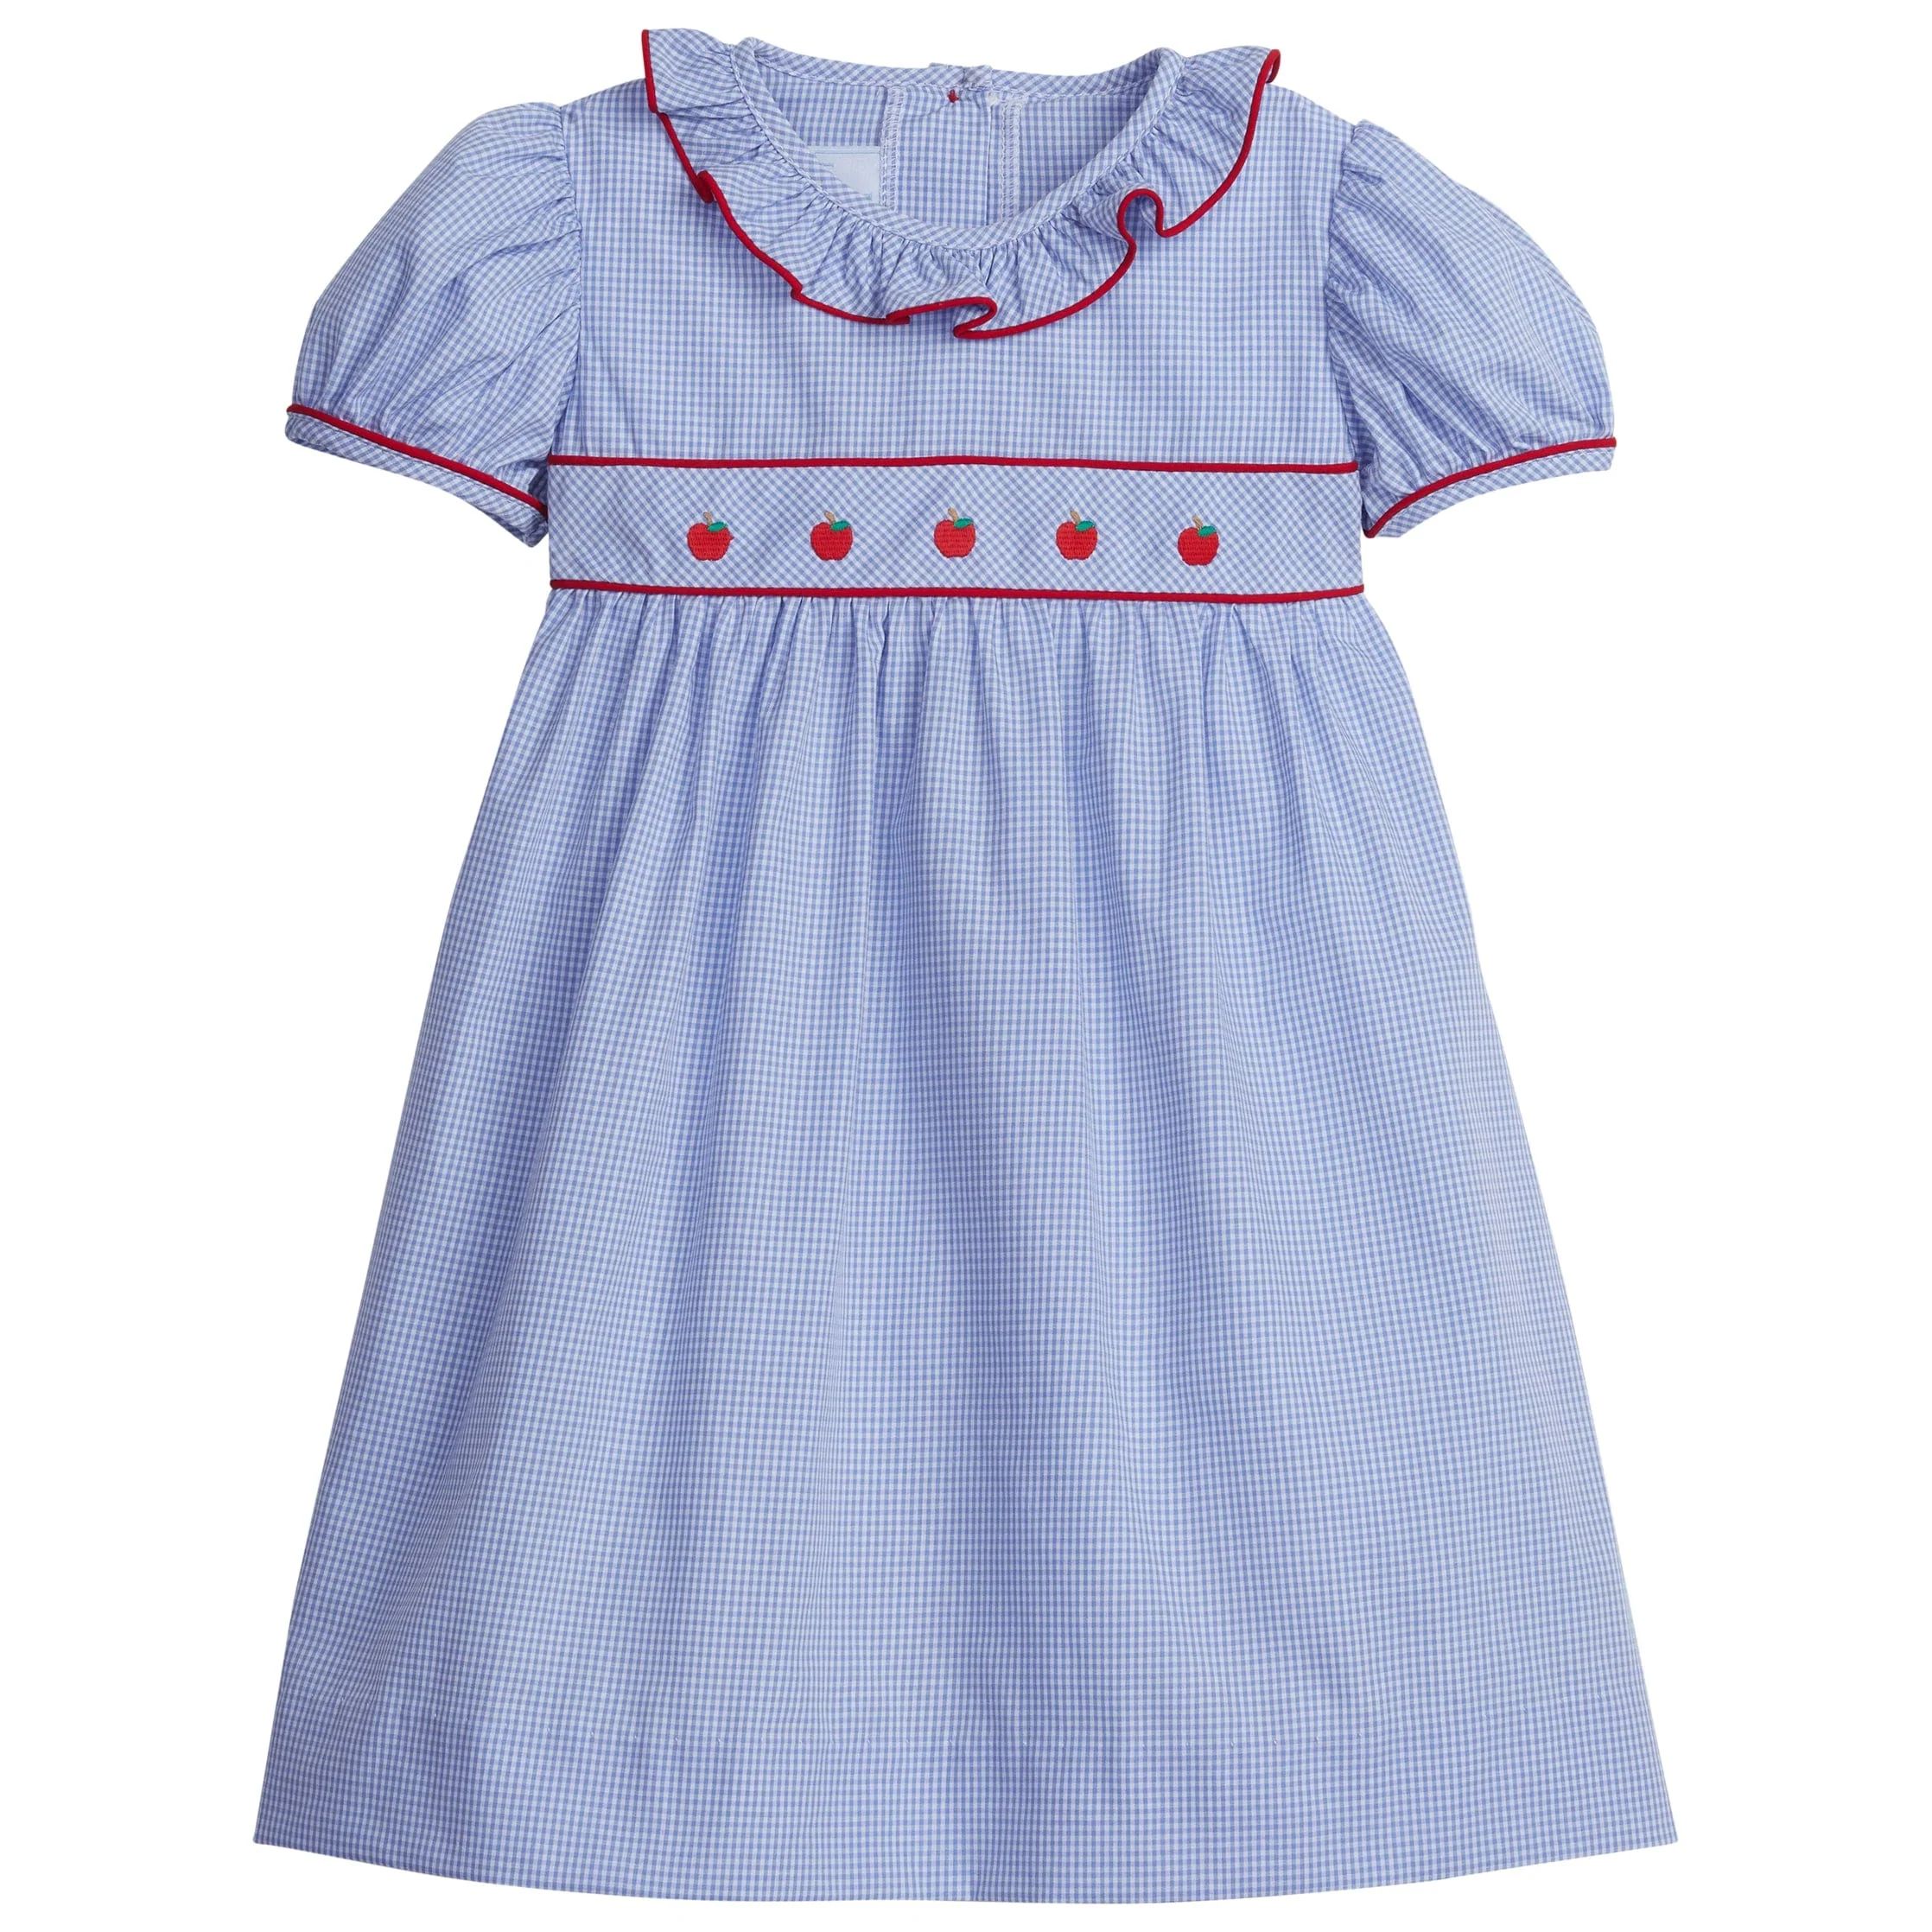 Caroline Apple Dress - Back to School Clothes | Little English